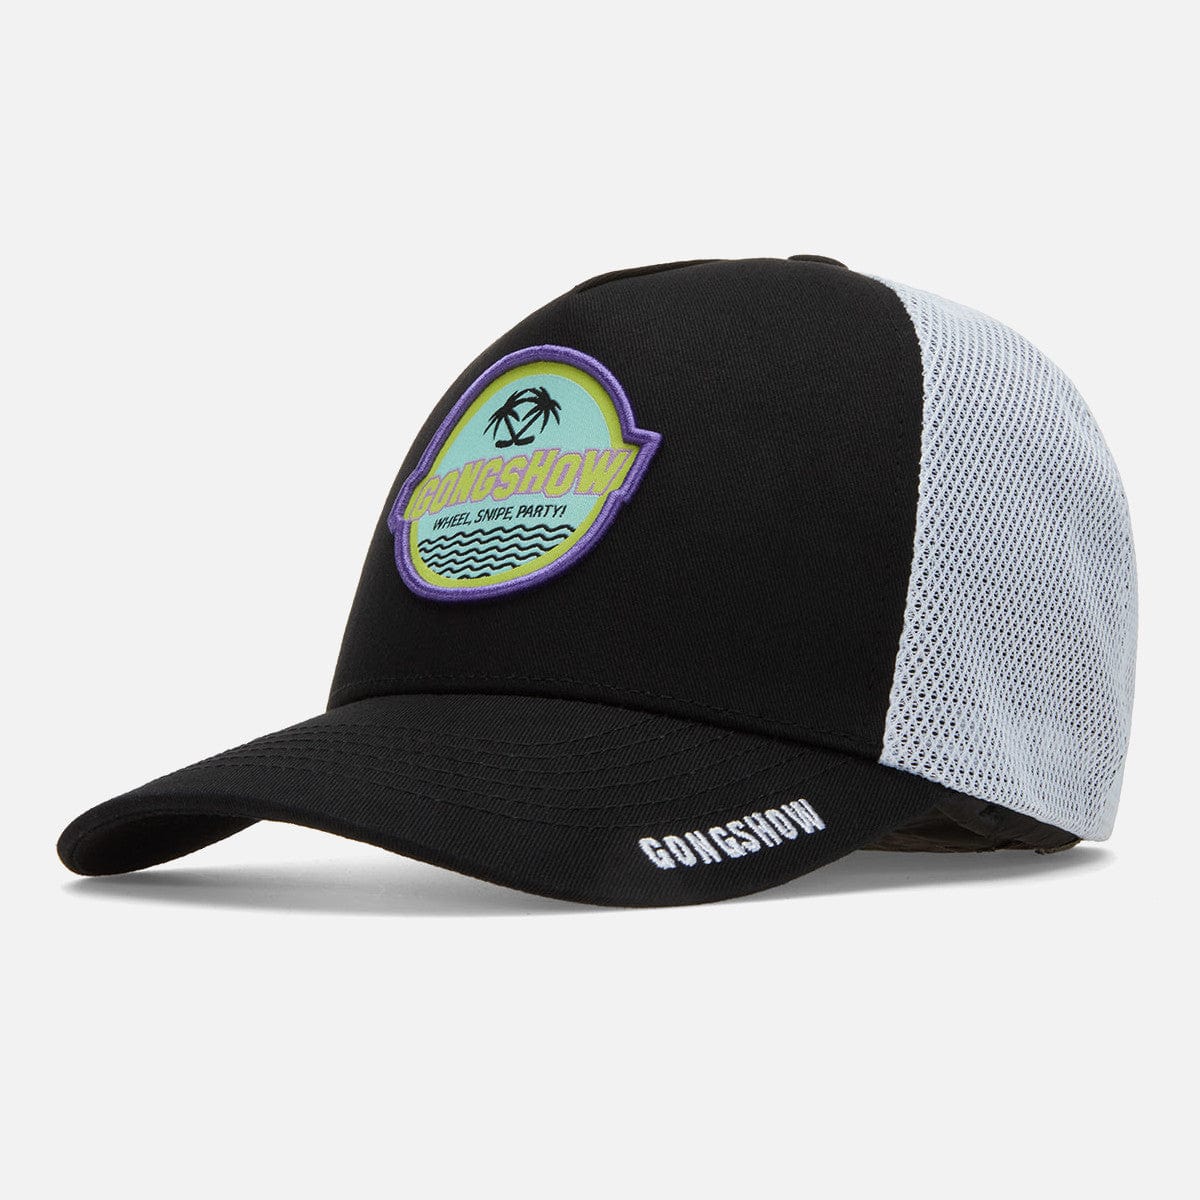 Gongshow Hockey Pool Shaker Snapback Hat